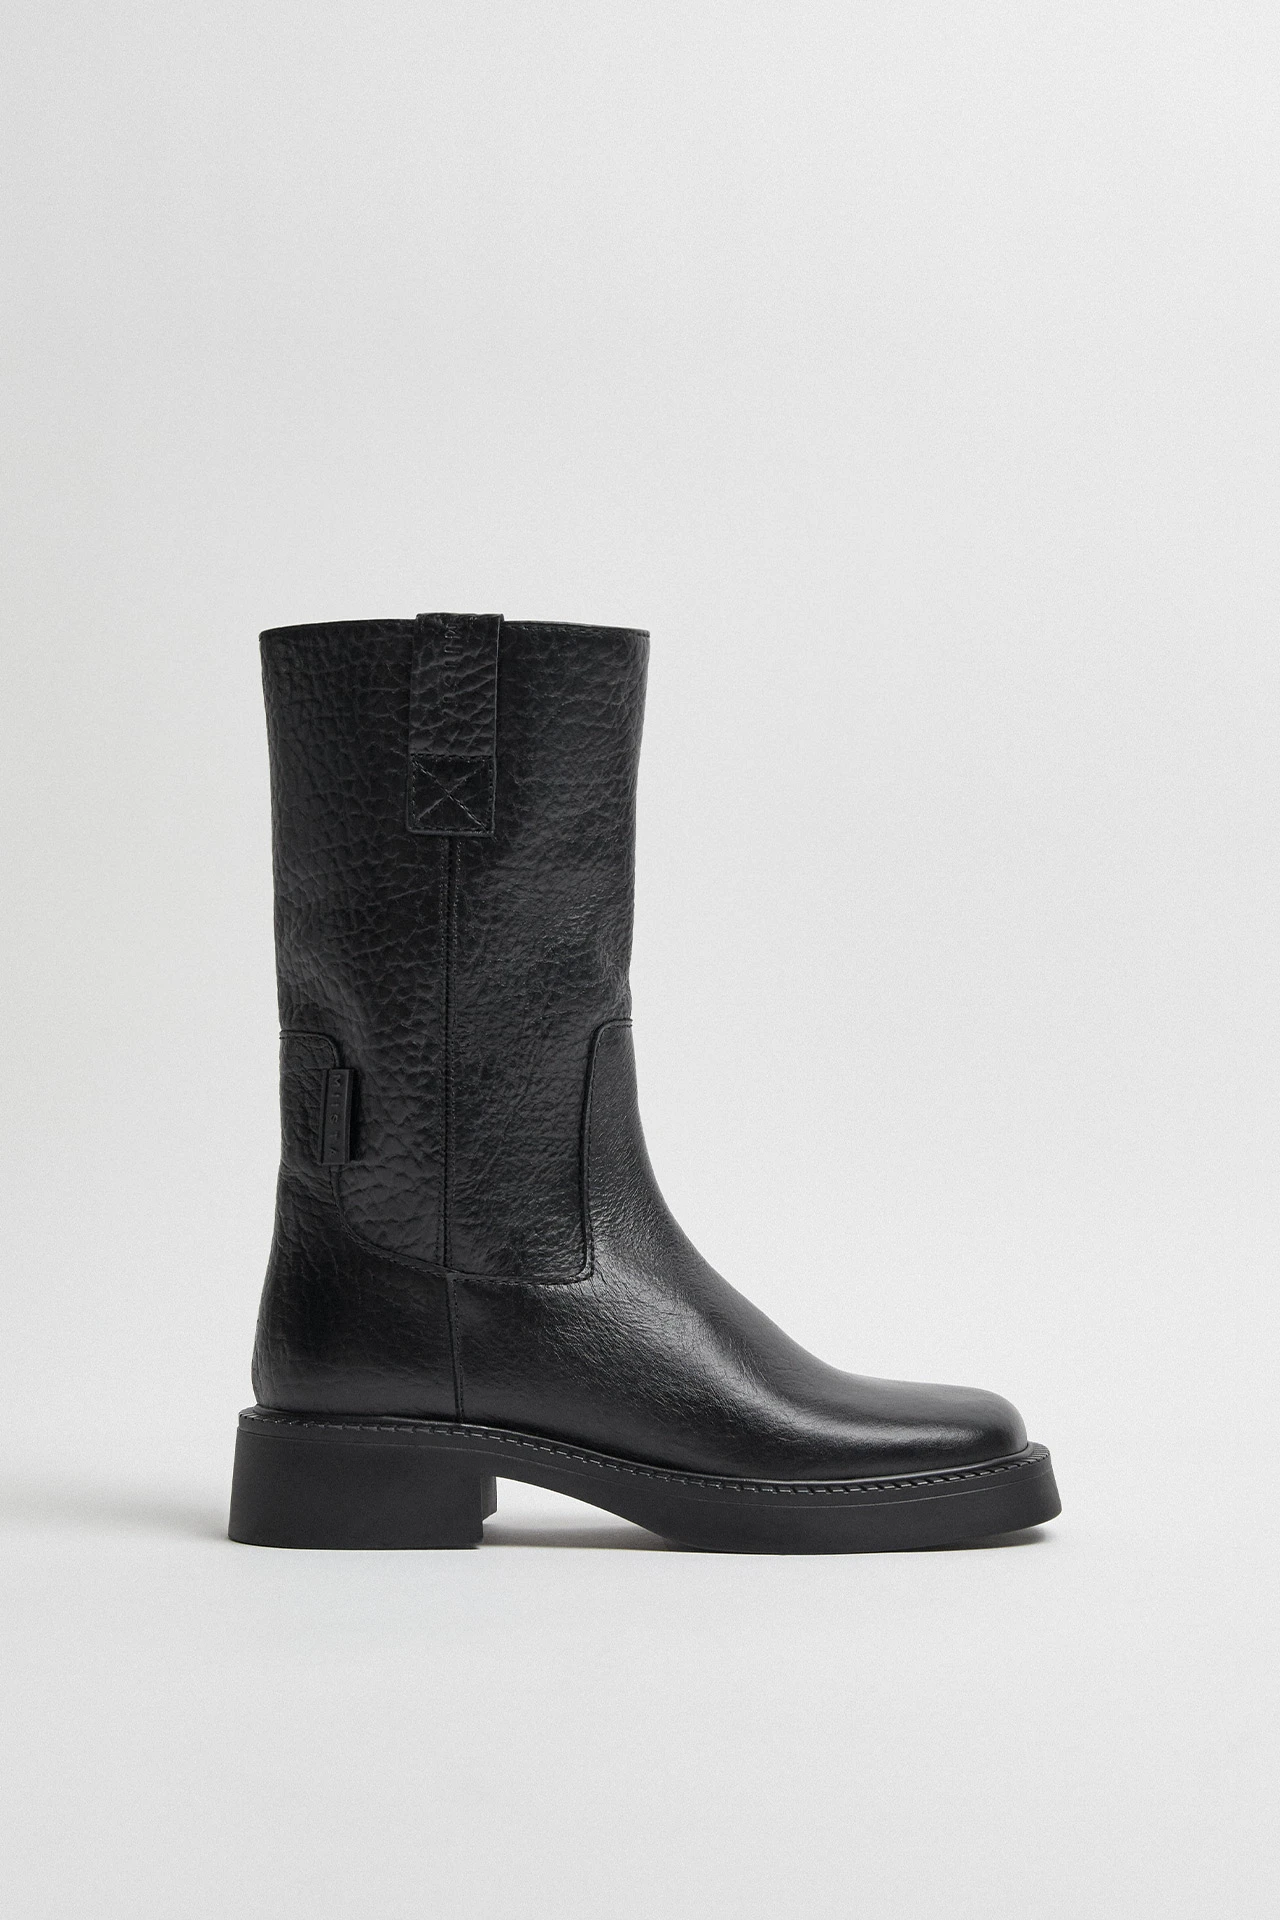 E8-aron-black-boots-01